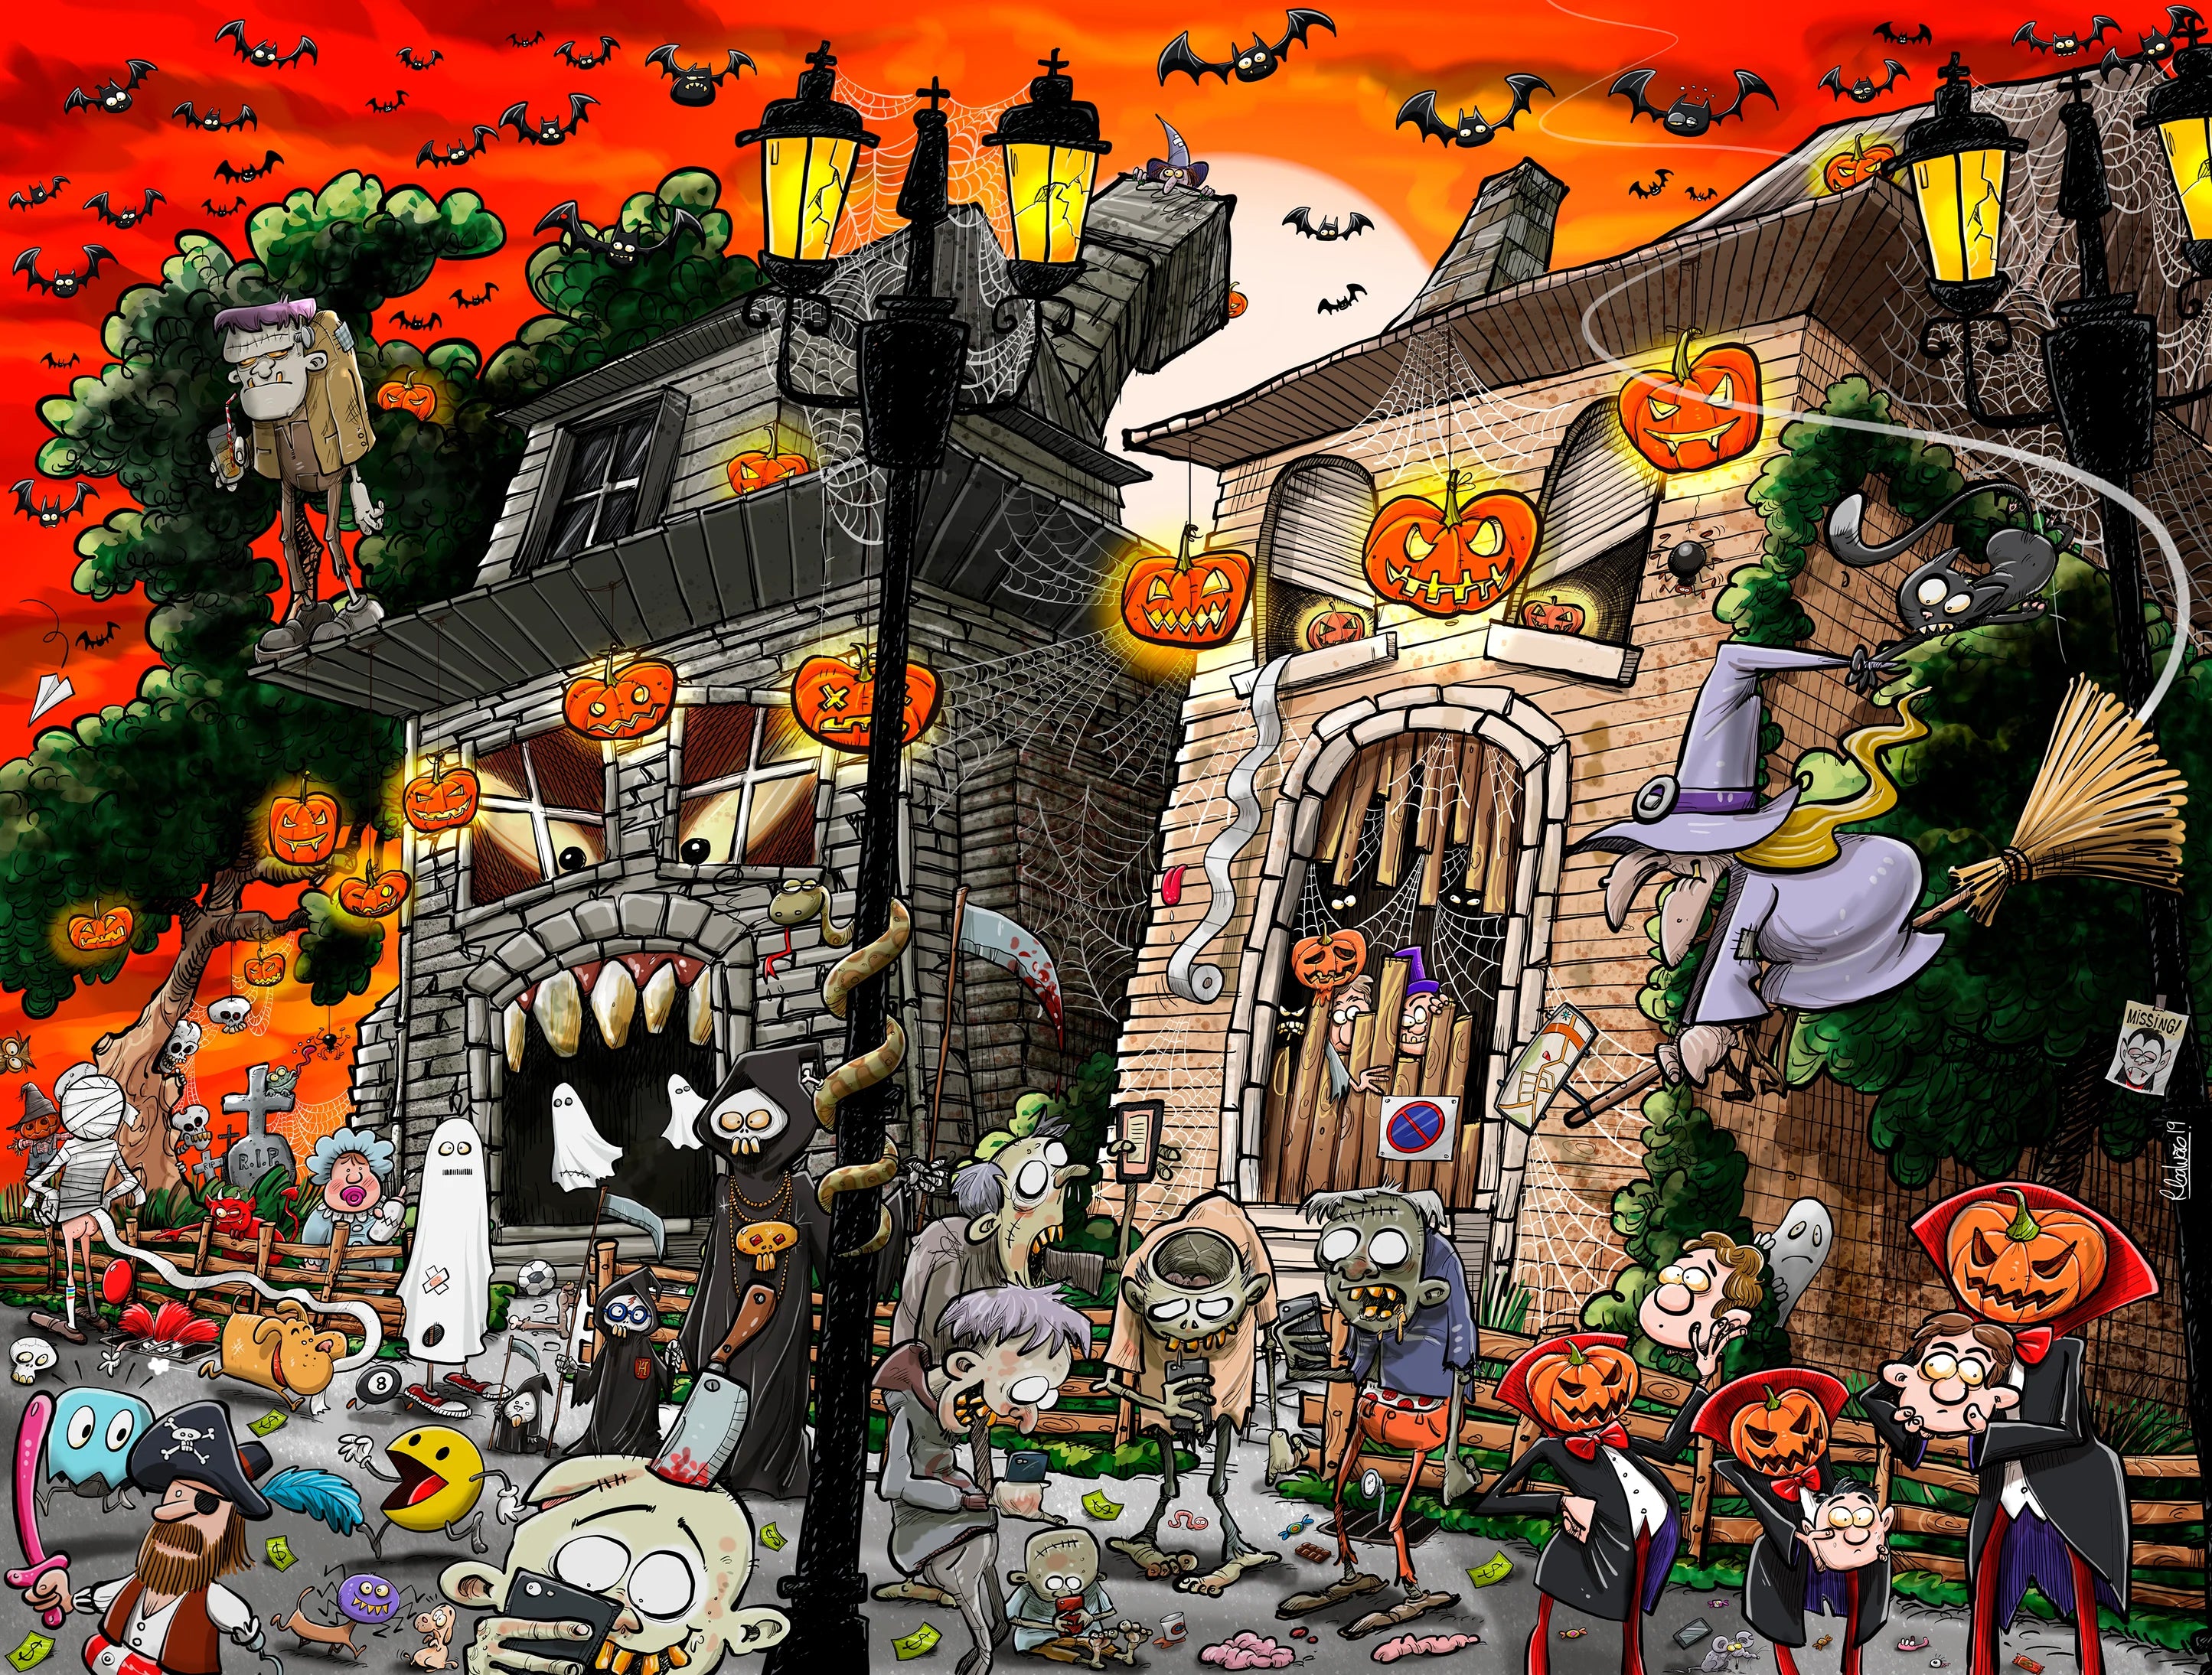 Chaos on Halloween 1000 Piece Jigsaw Puzzle